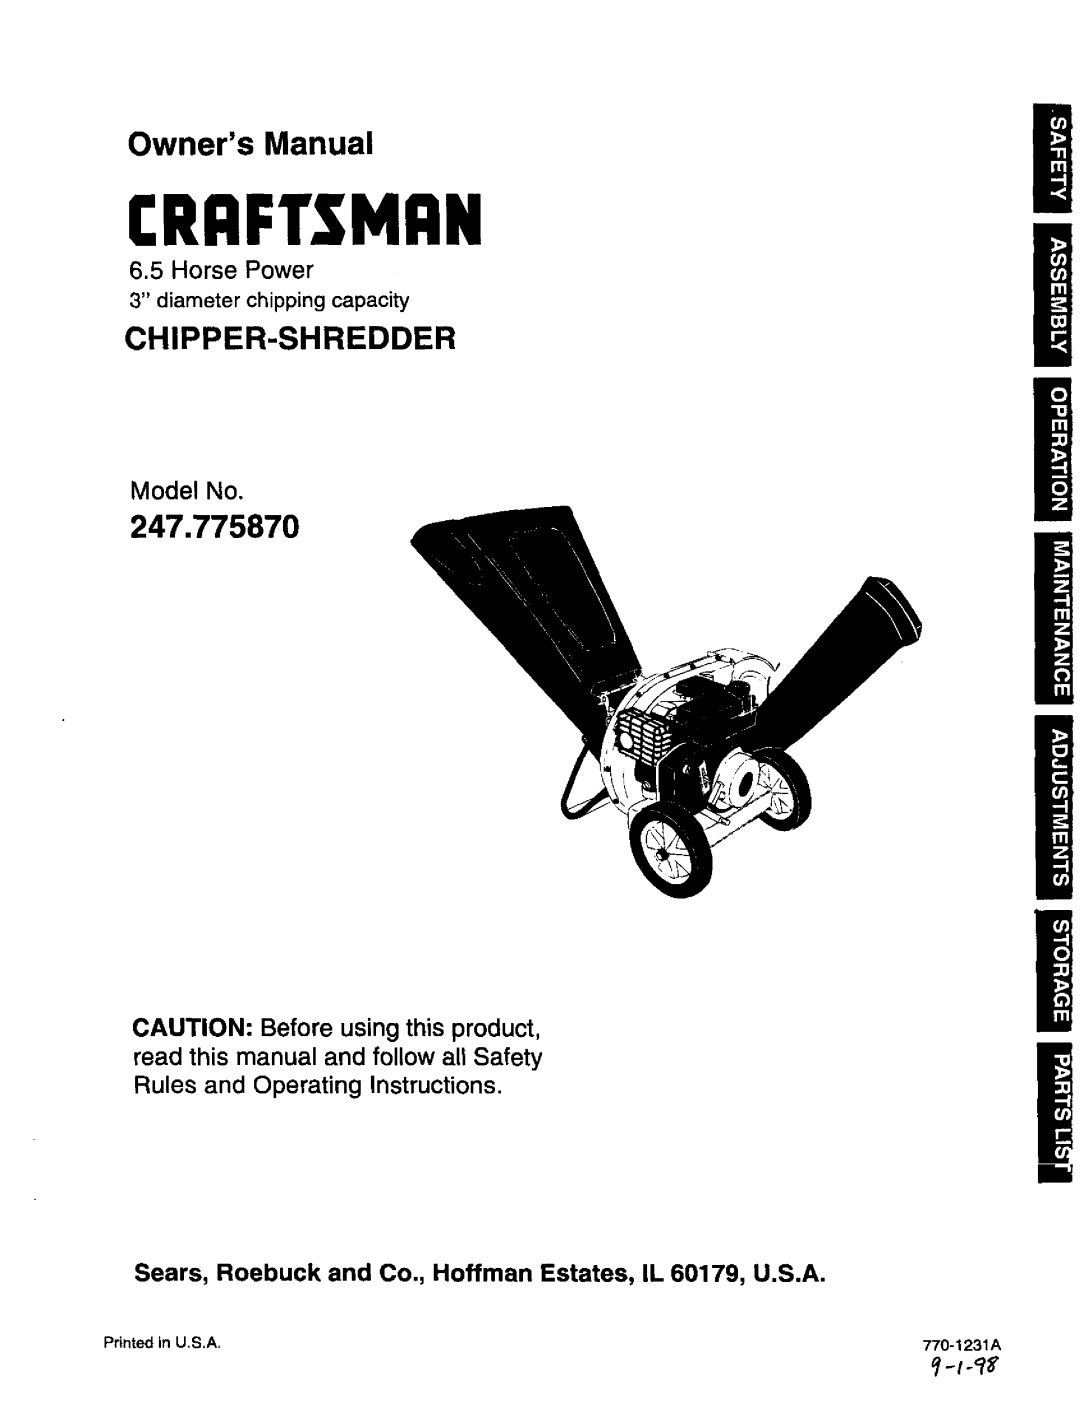 Craftsman 247.775870 owner manual Owners Manual, Chipper-Shredder, 6.5Horse Power, Model No, Crrftsman 